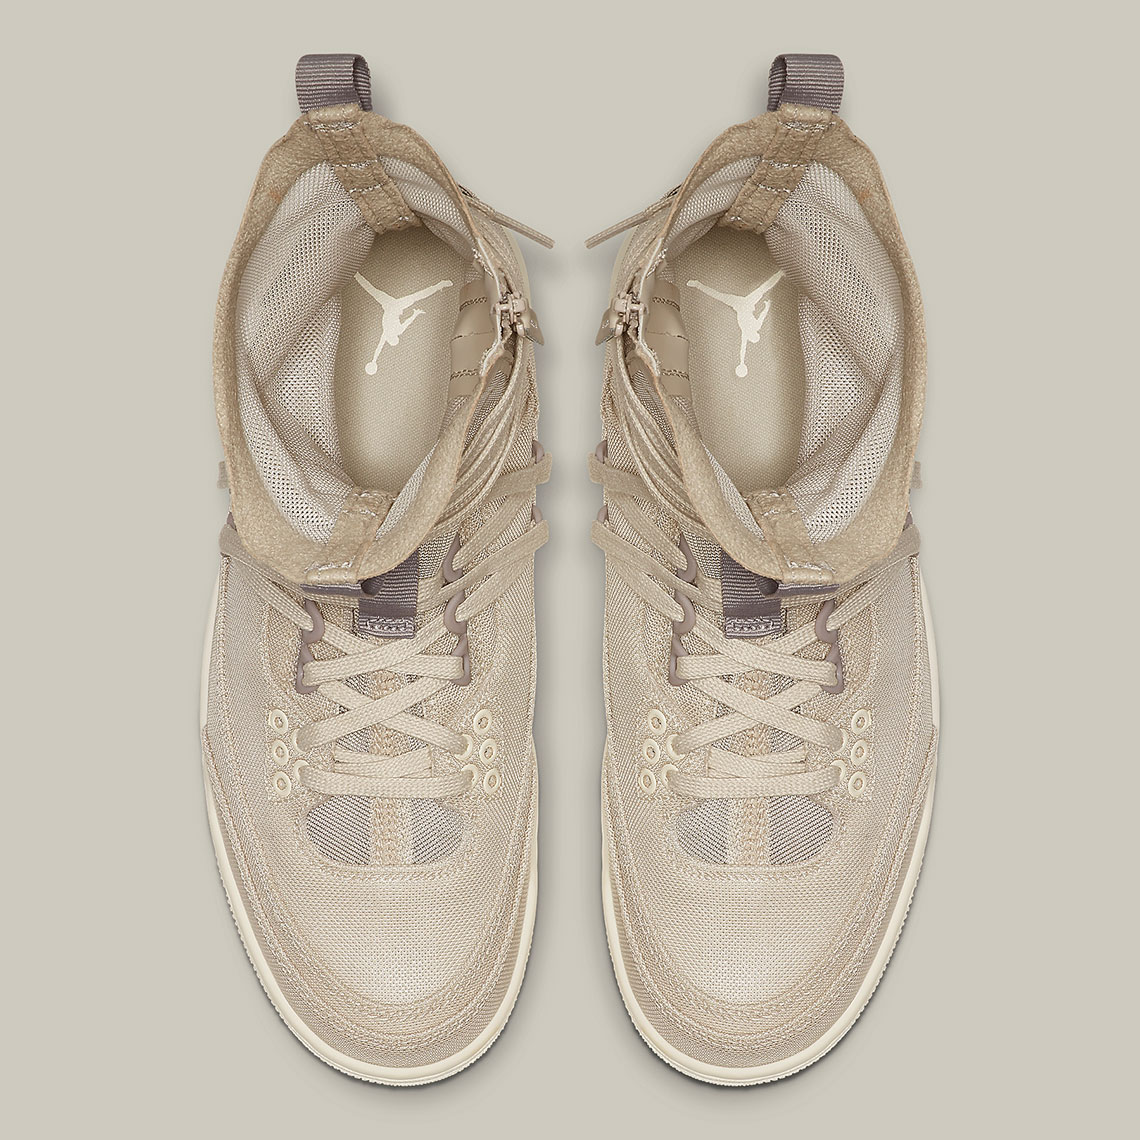 Jordan RTR EXP Lite BQ8394 100 002 Release Info | SneakerNews.com